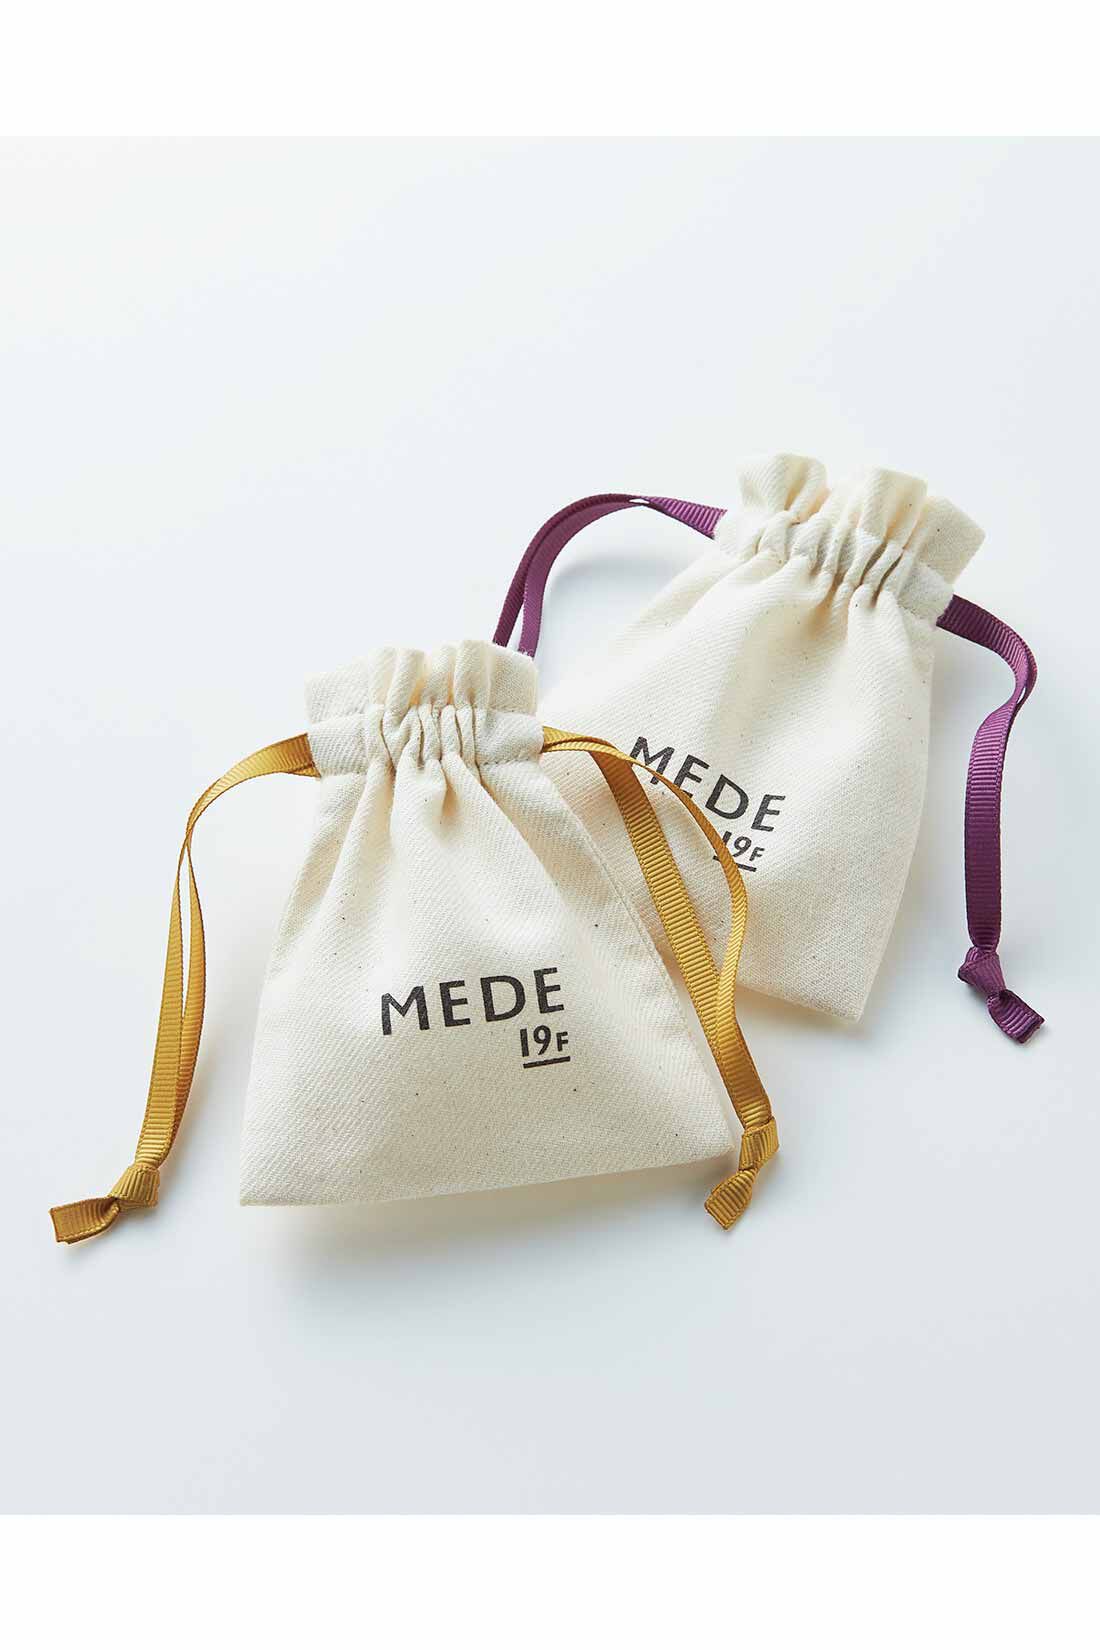 MEDE19F|YPAC for MEDE19F　フランス製陶器ボタンイヤリング type.14|MEDE19Fオリジナルきんちゃくに入れてお届けします。